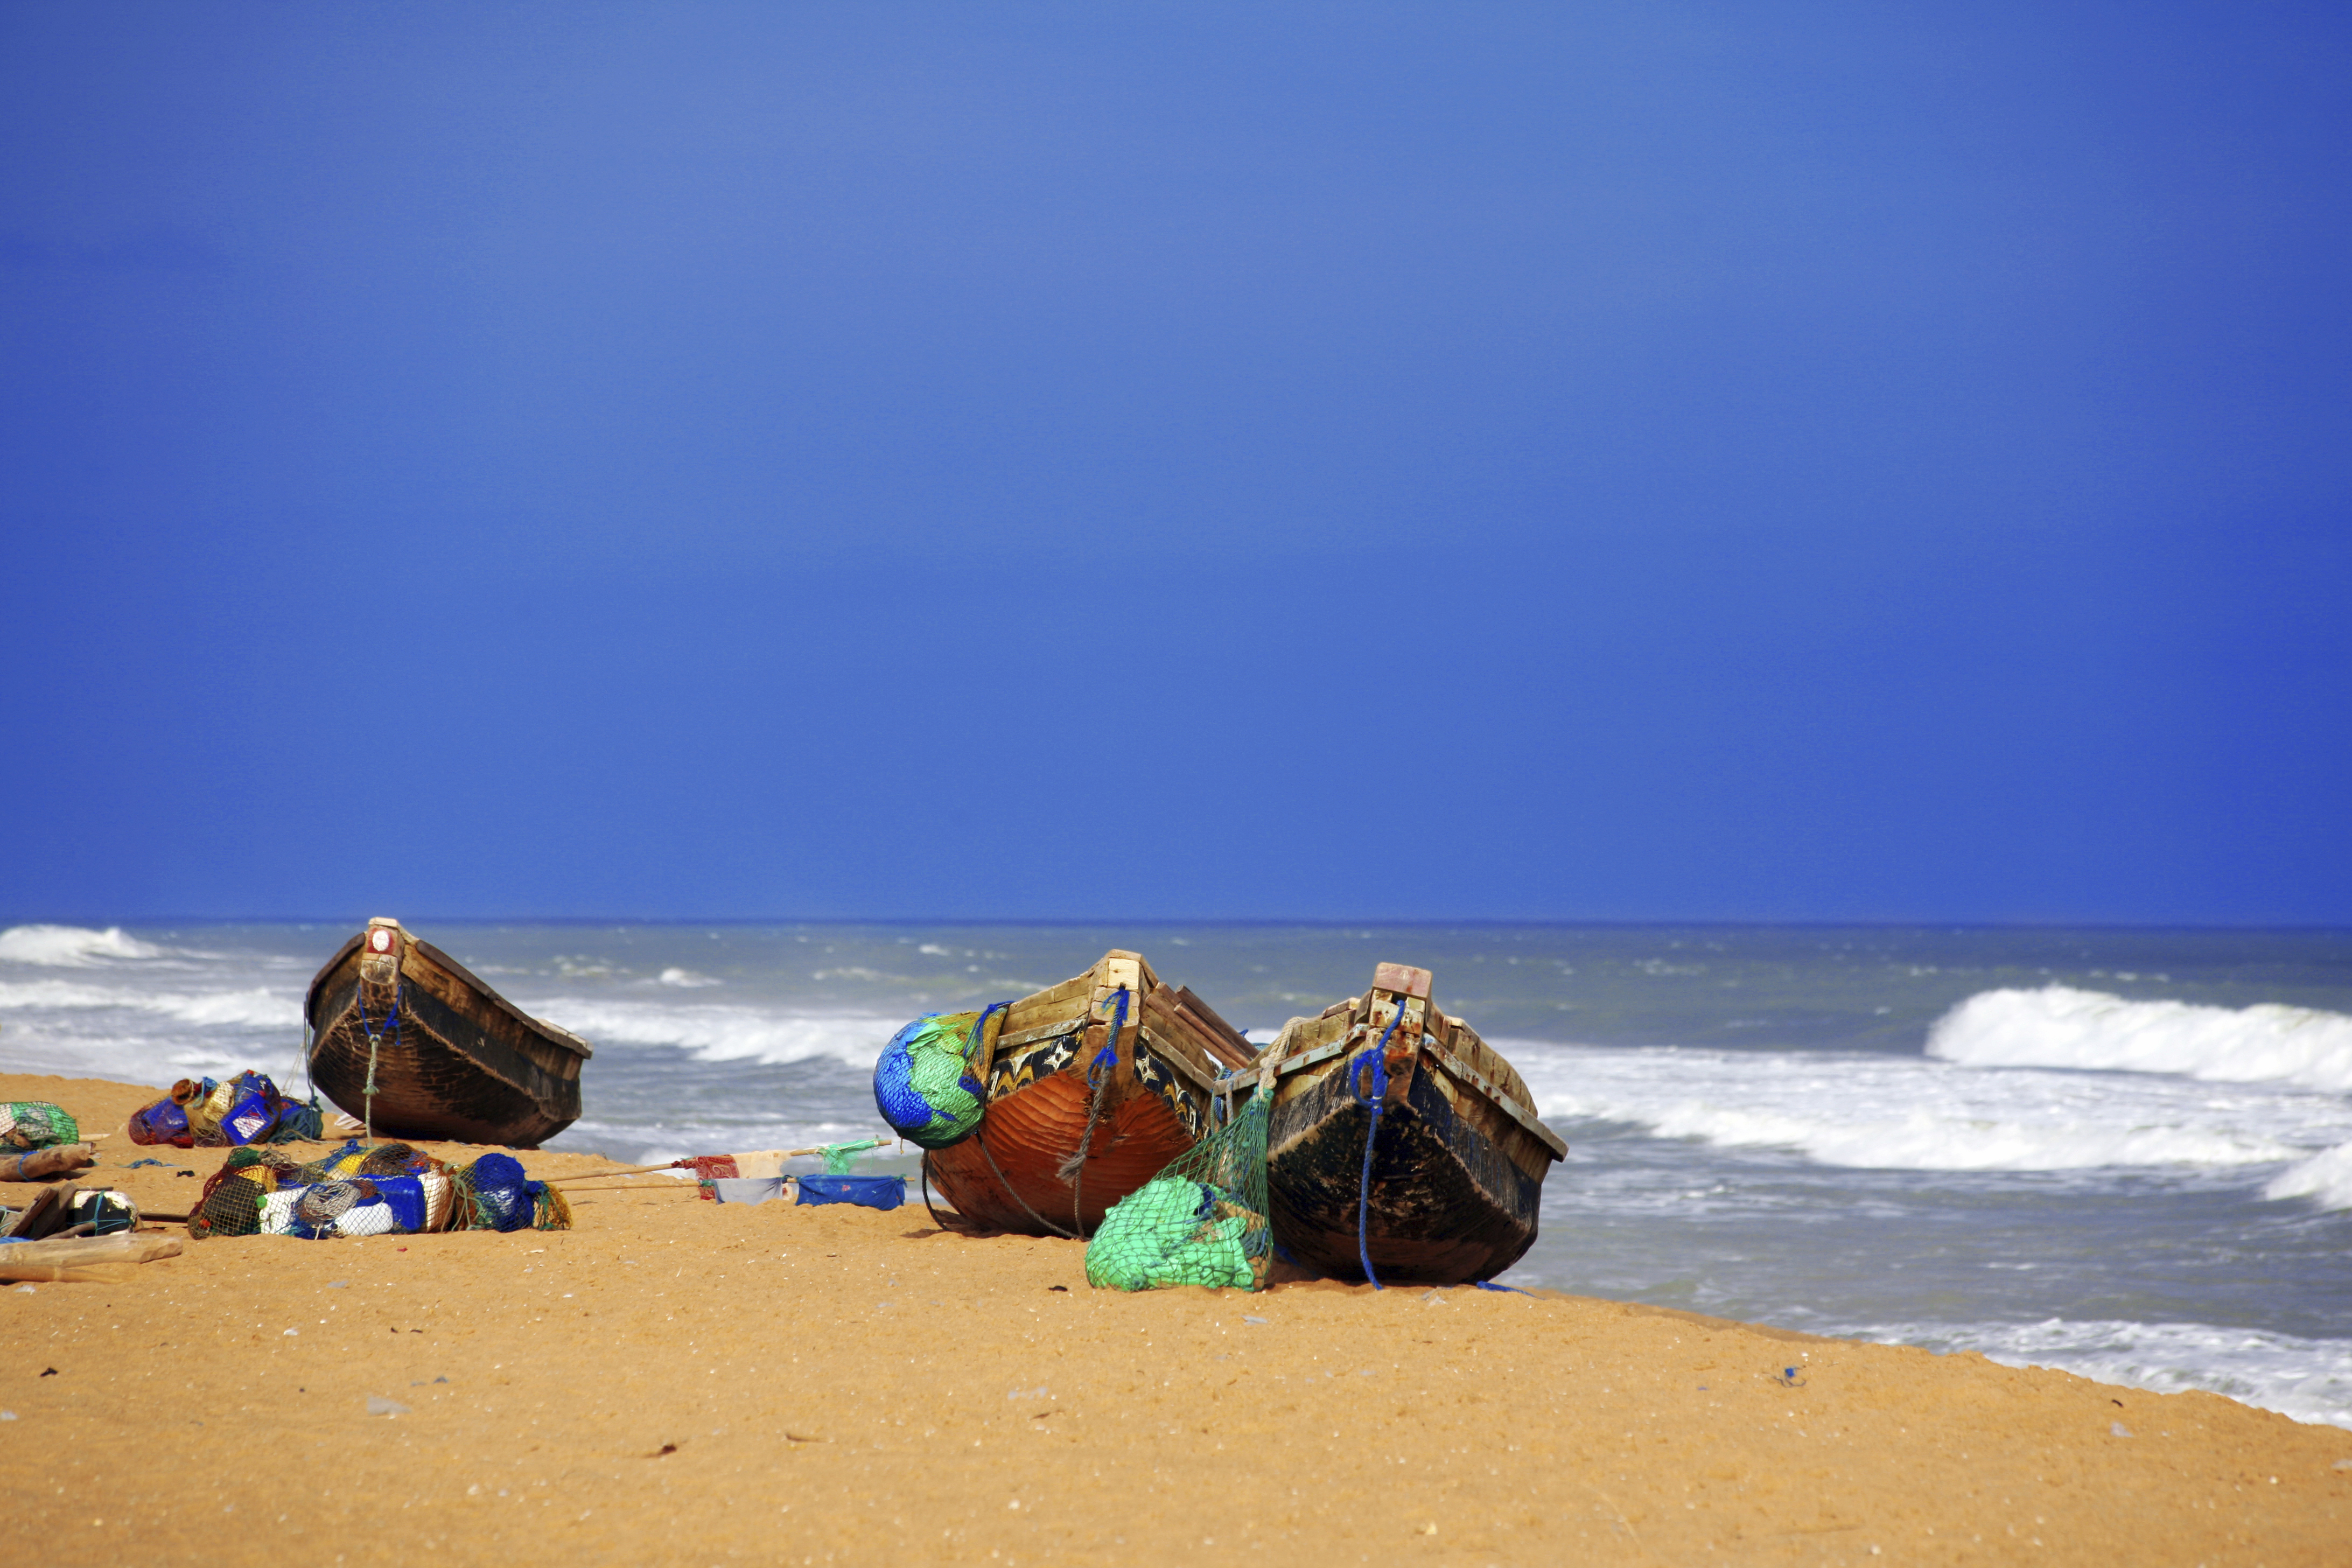 Benin fishing boats